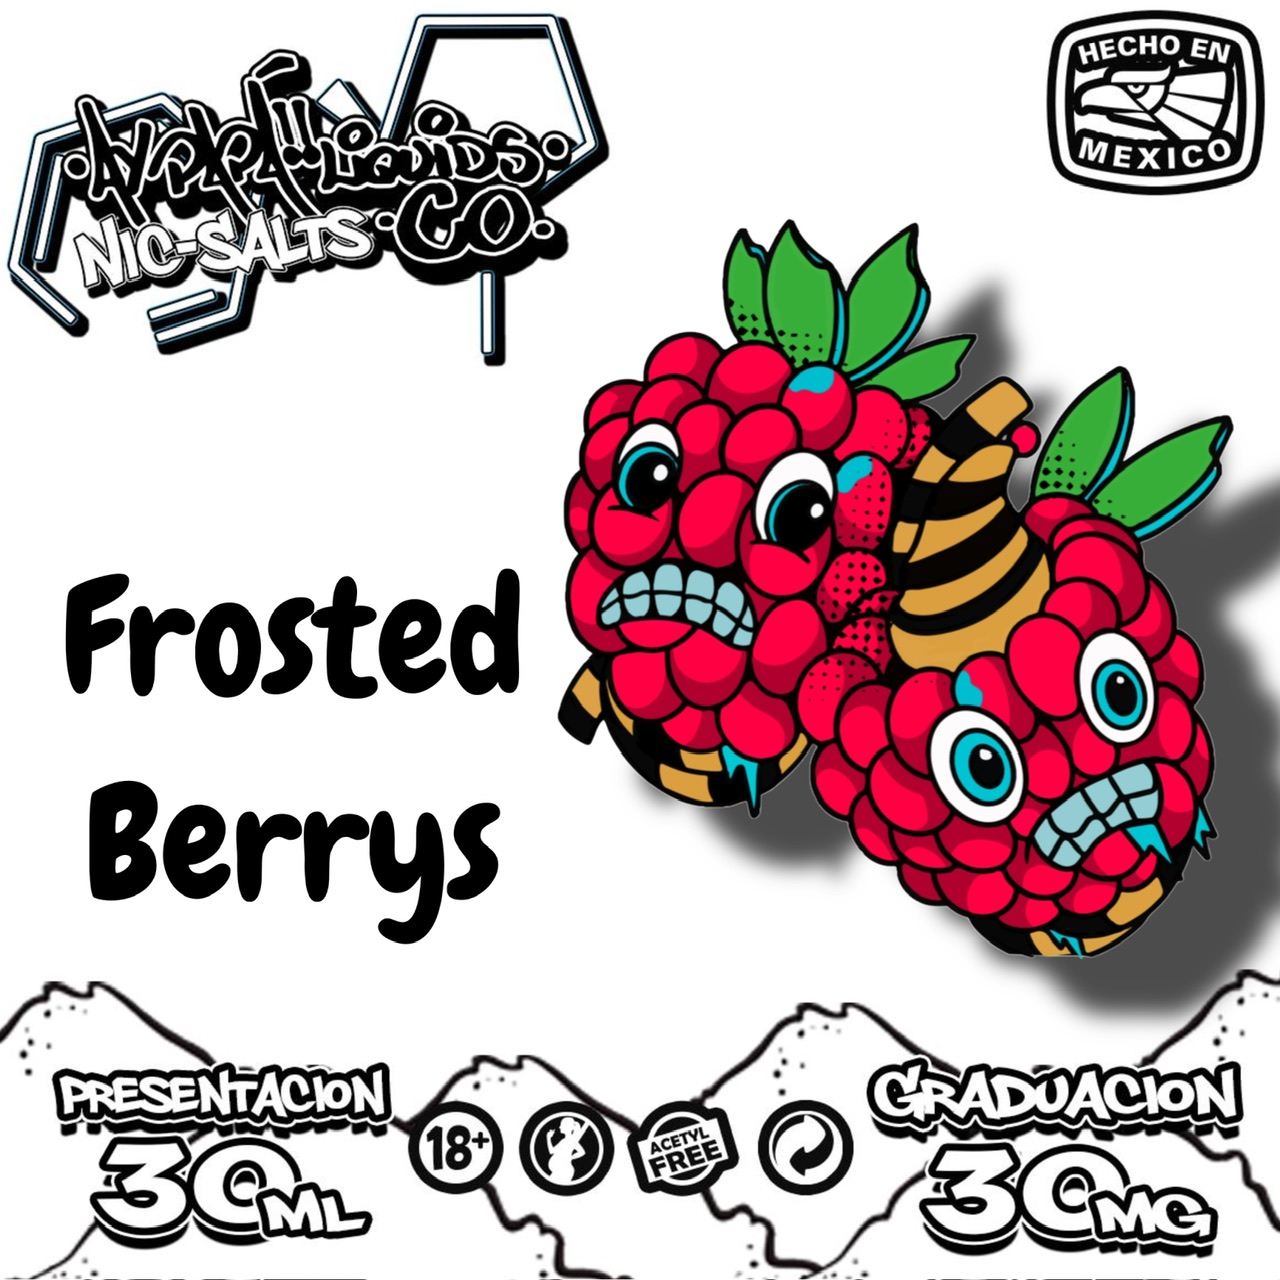 Frosted Berries Nicsalt